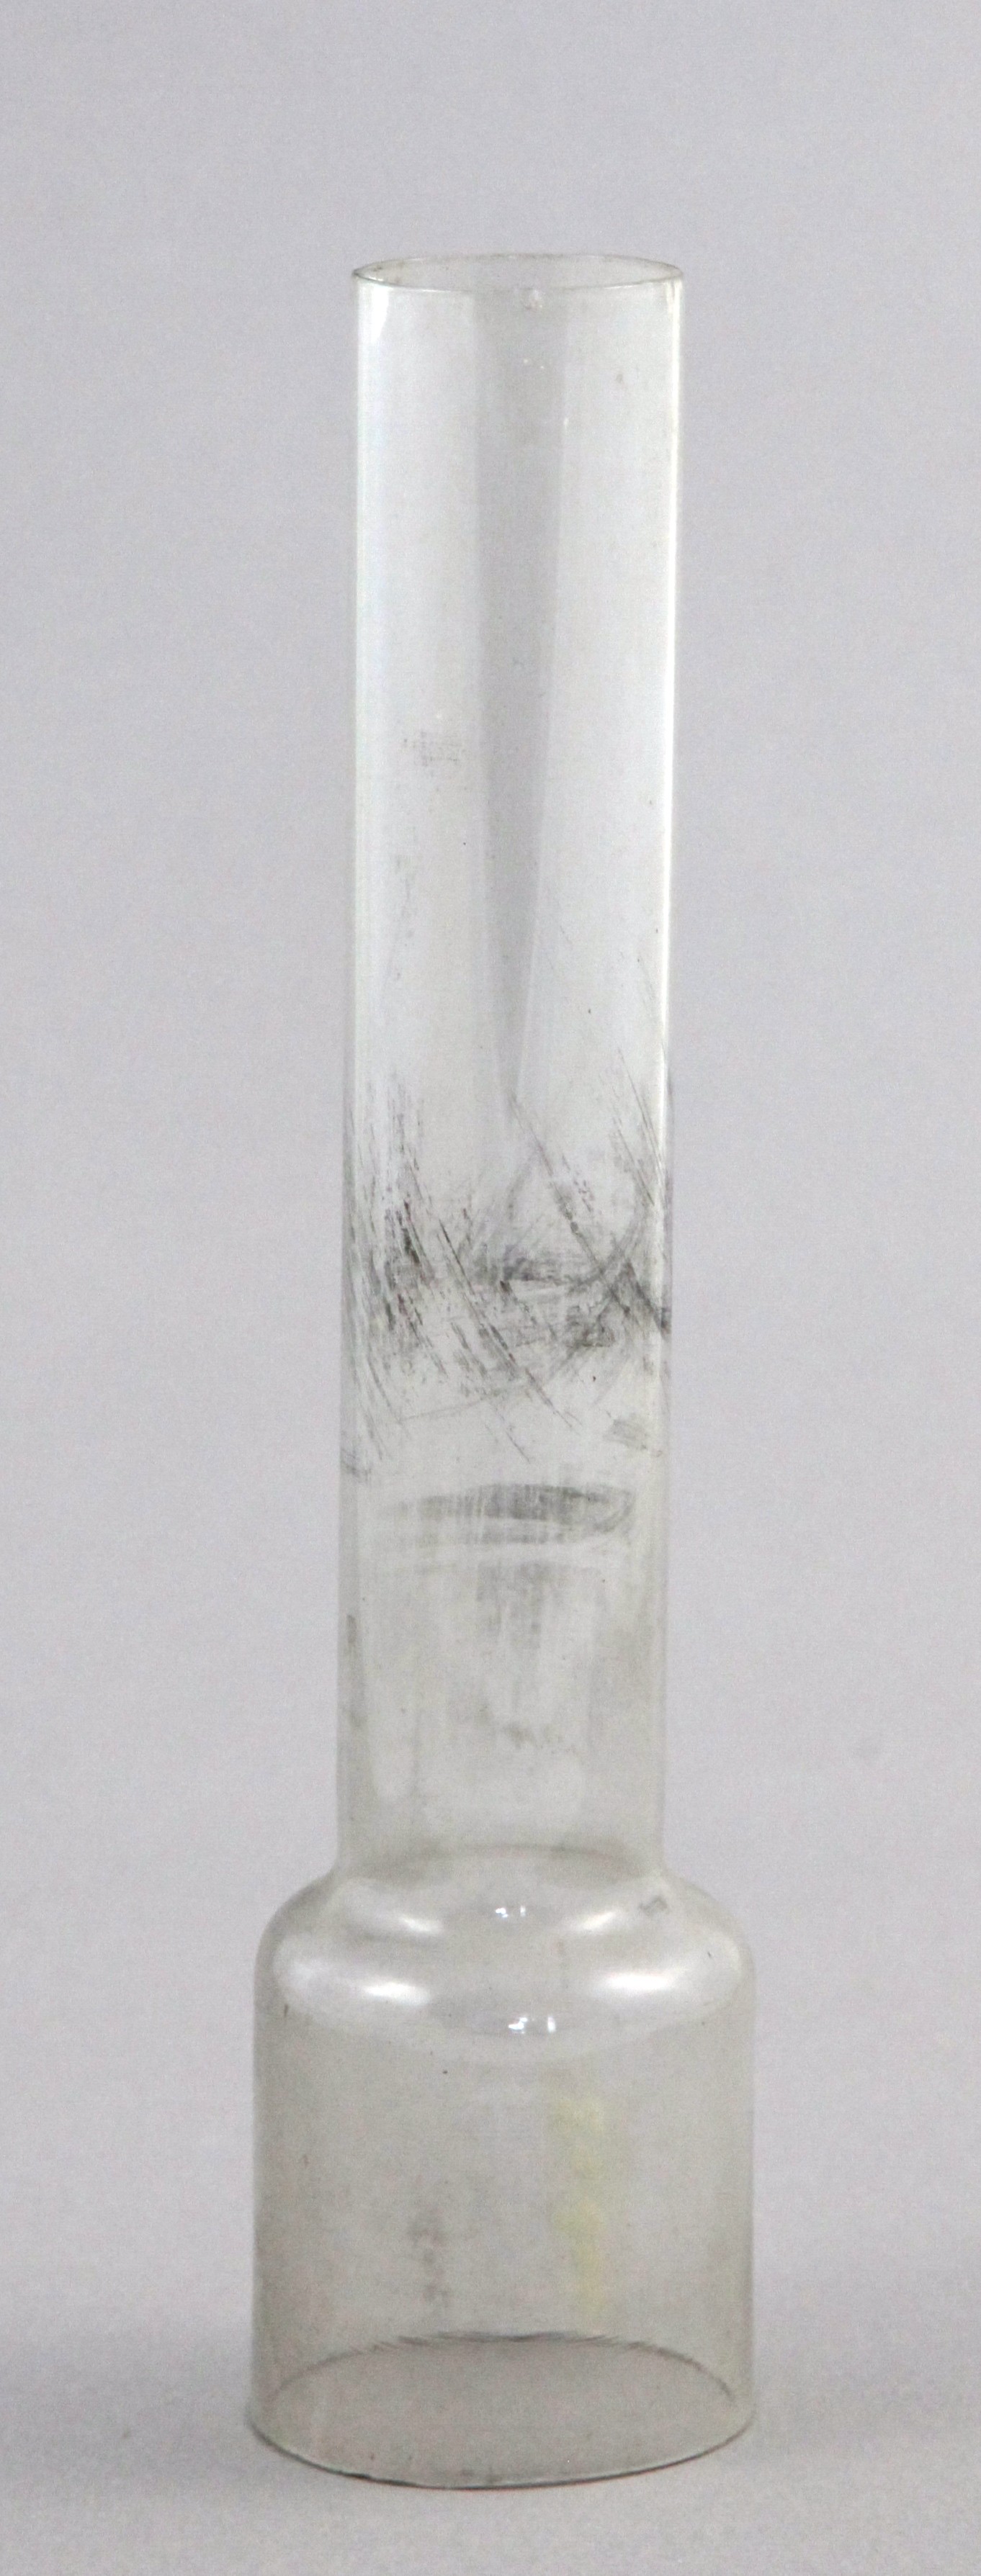 Glaszylinder einer Petroleumlampe (Hellweg-Museum Unna CC BY-NC-SA)